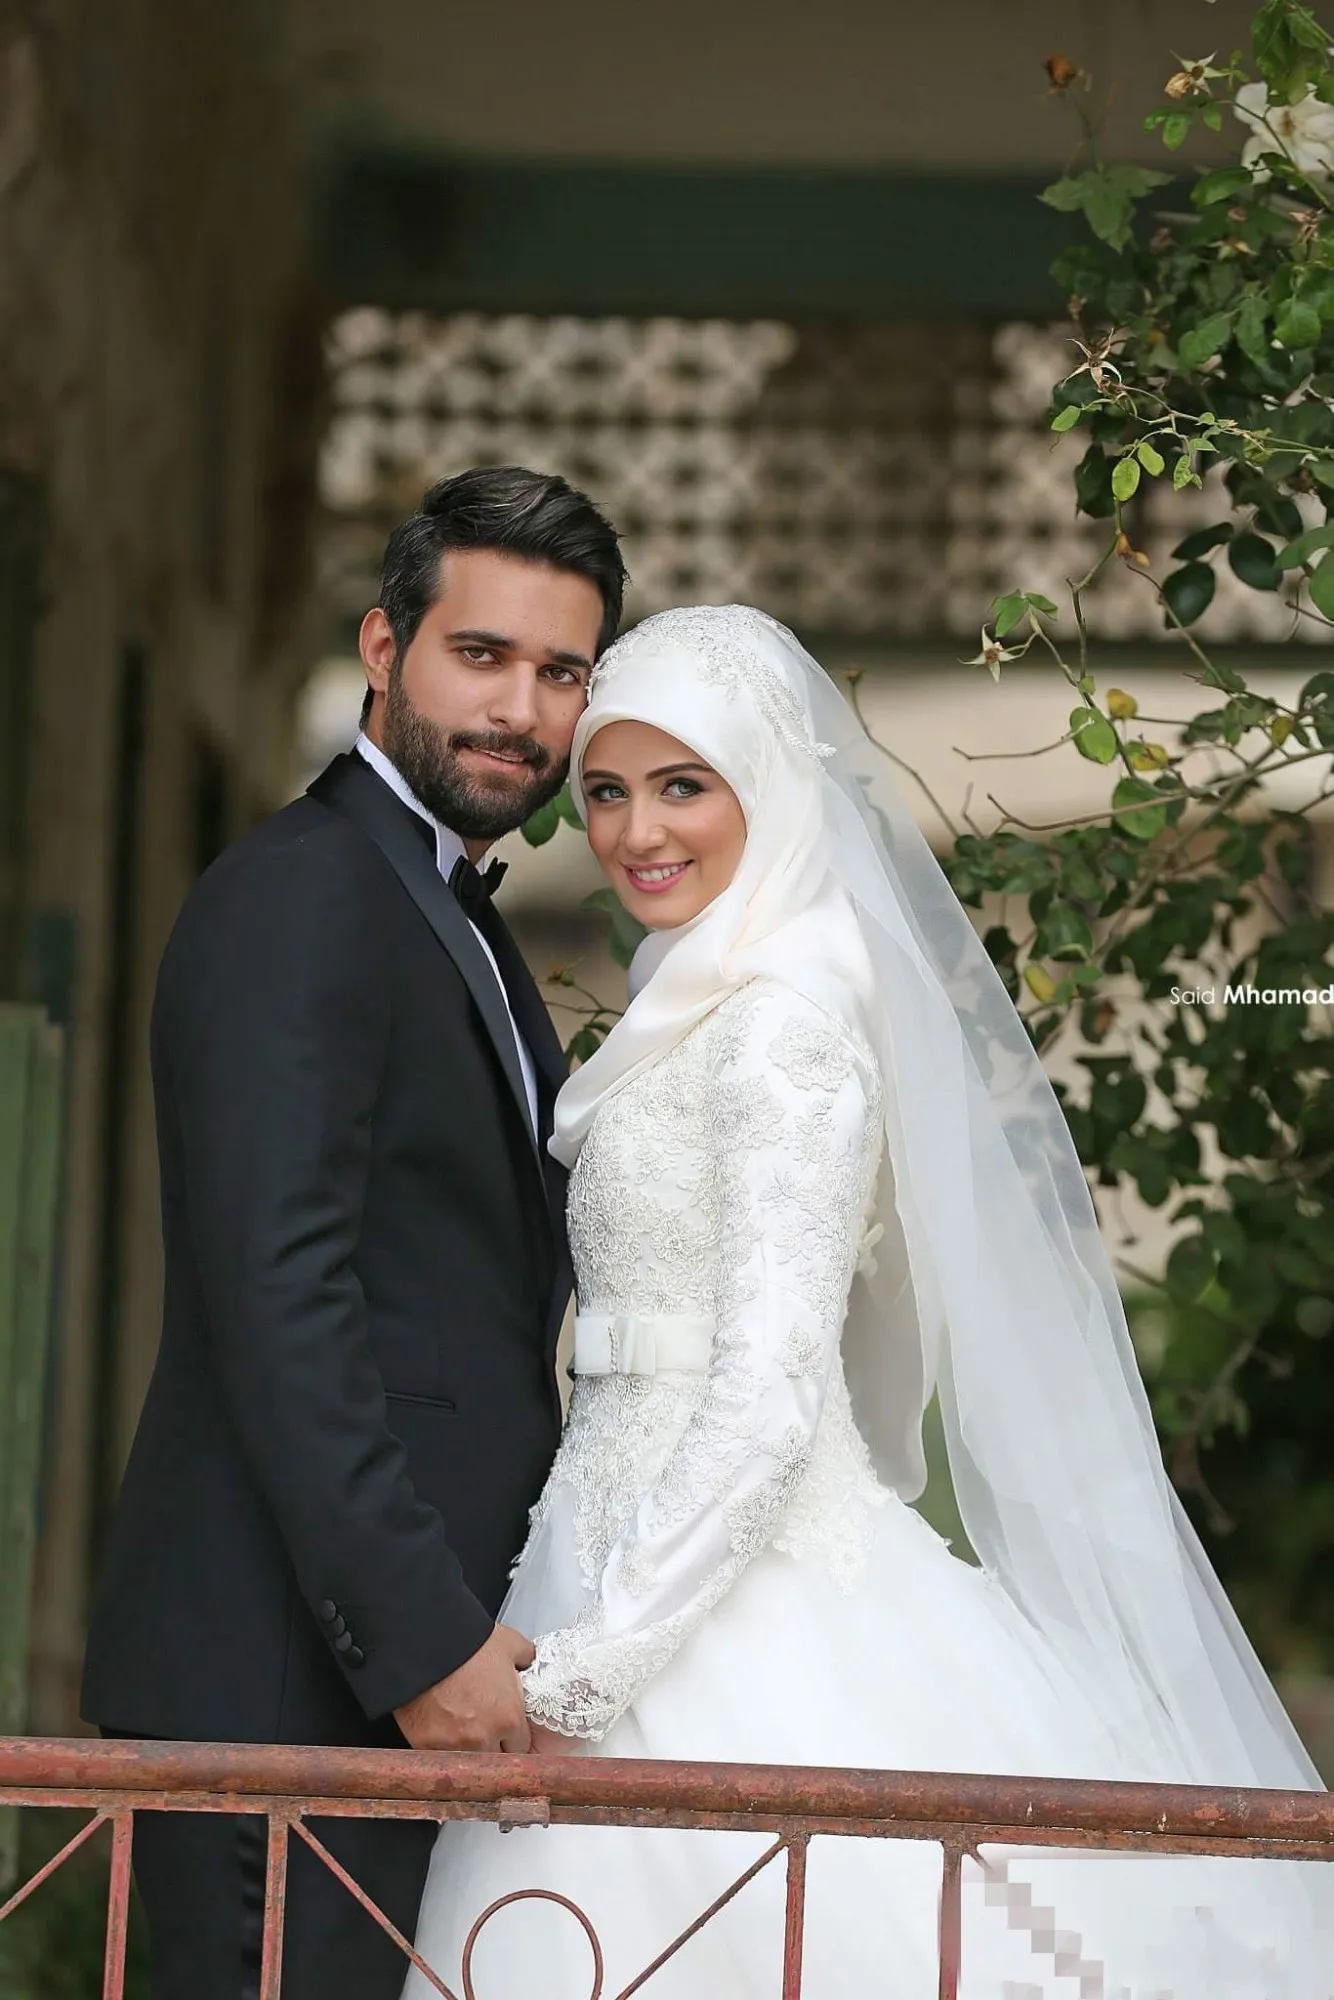 Muslim Wedding Dresses Said Mhamad Lace Winter Bridal Gowns Long Sleeves High Neck Arabic Islamic A-Line Wedding Dress